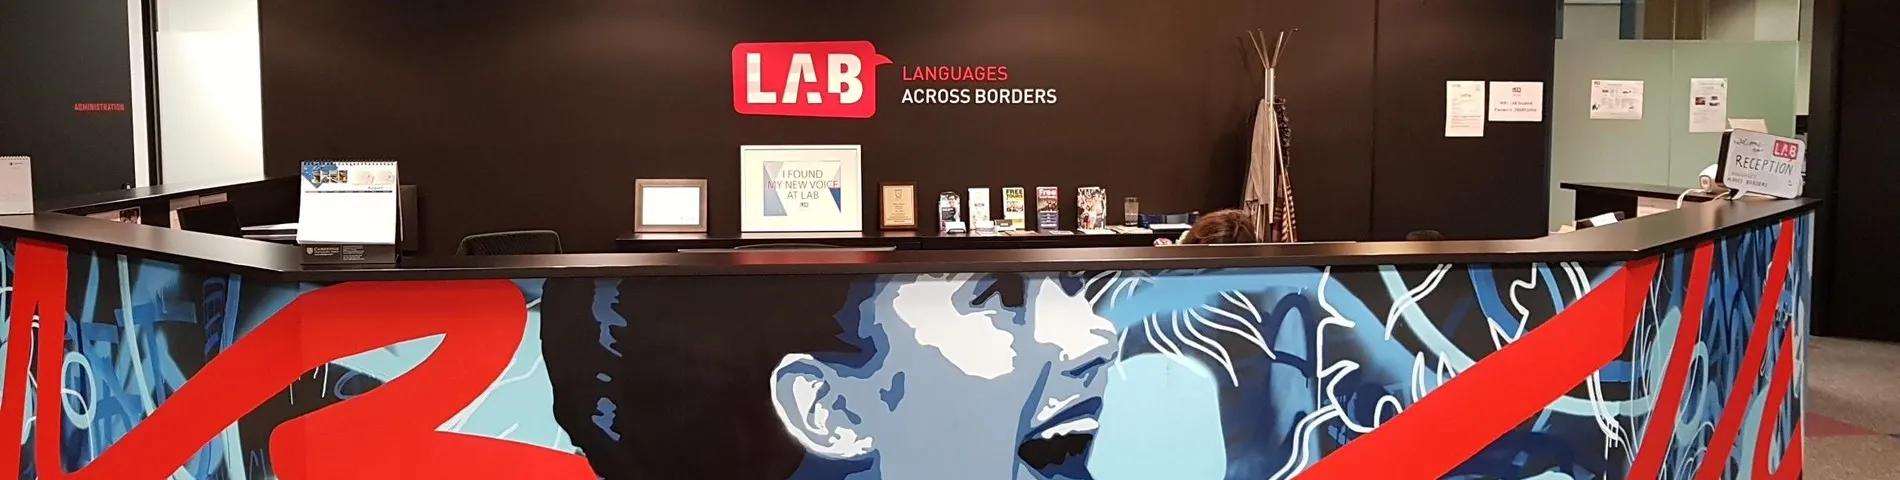 LAB - Languages Across Borders صورة 1